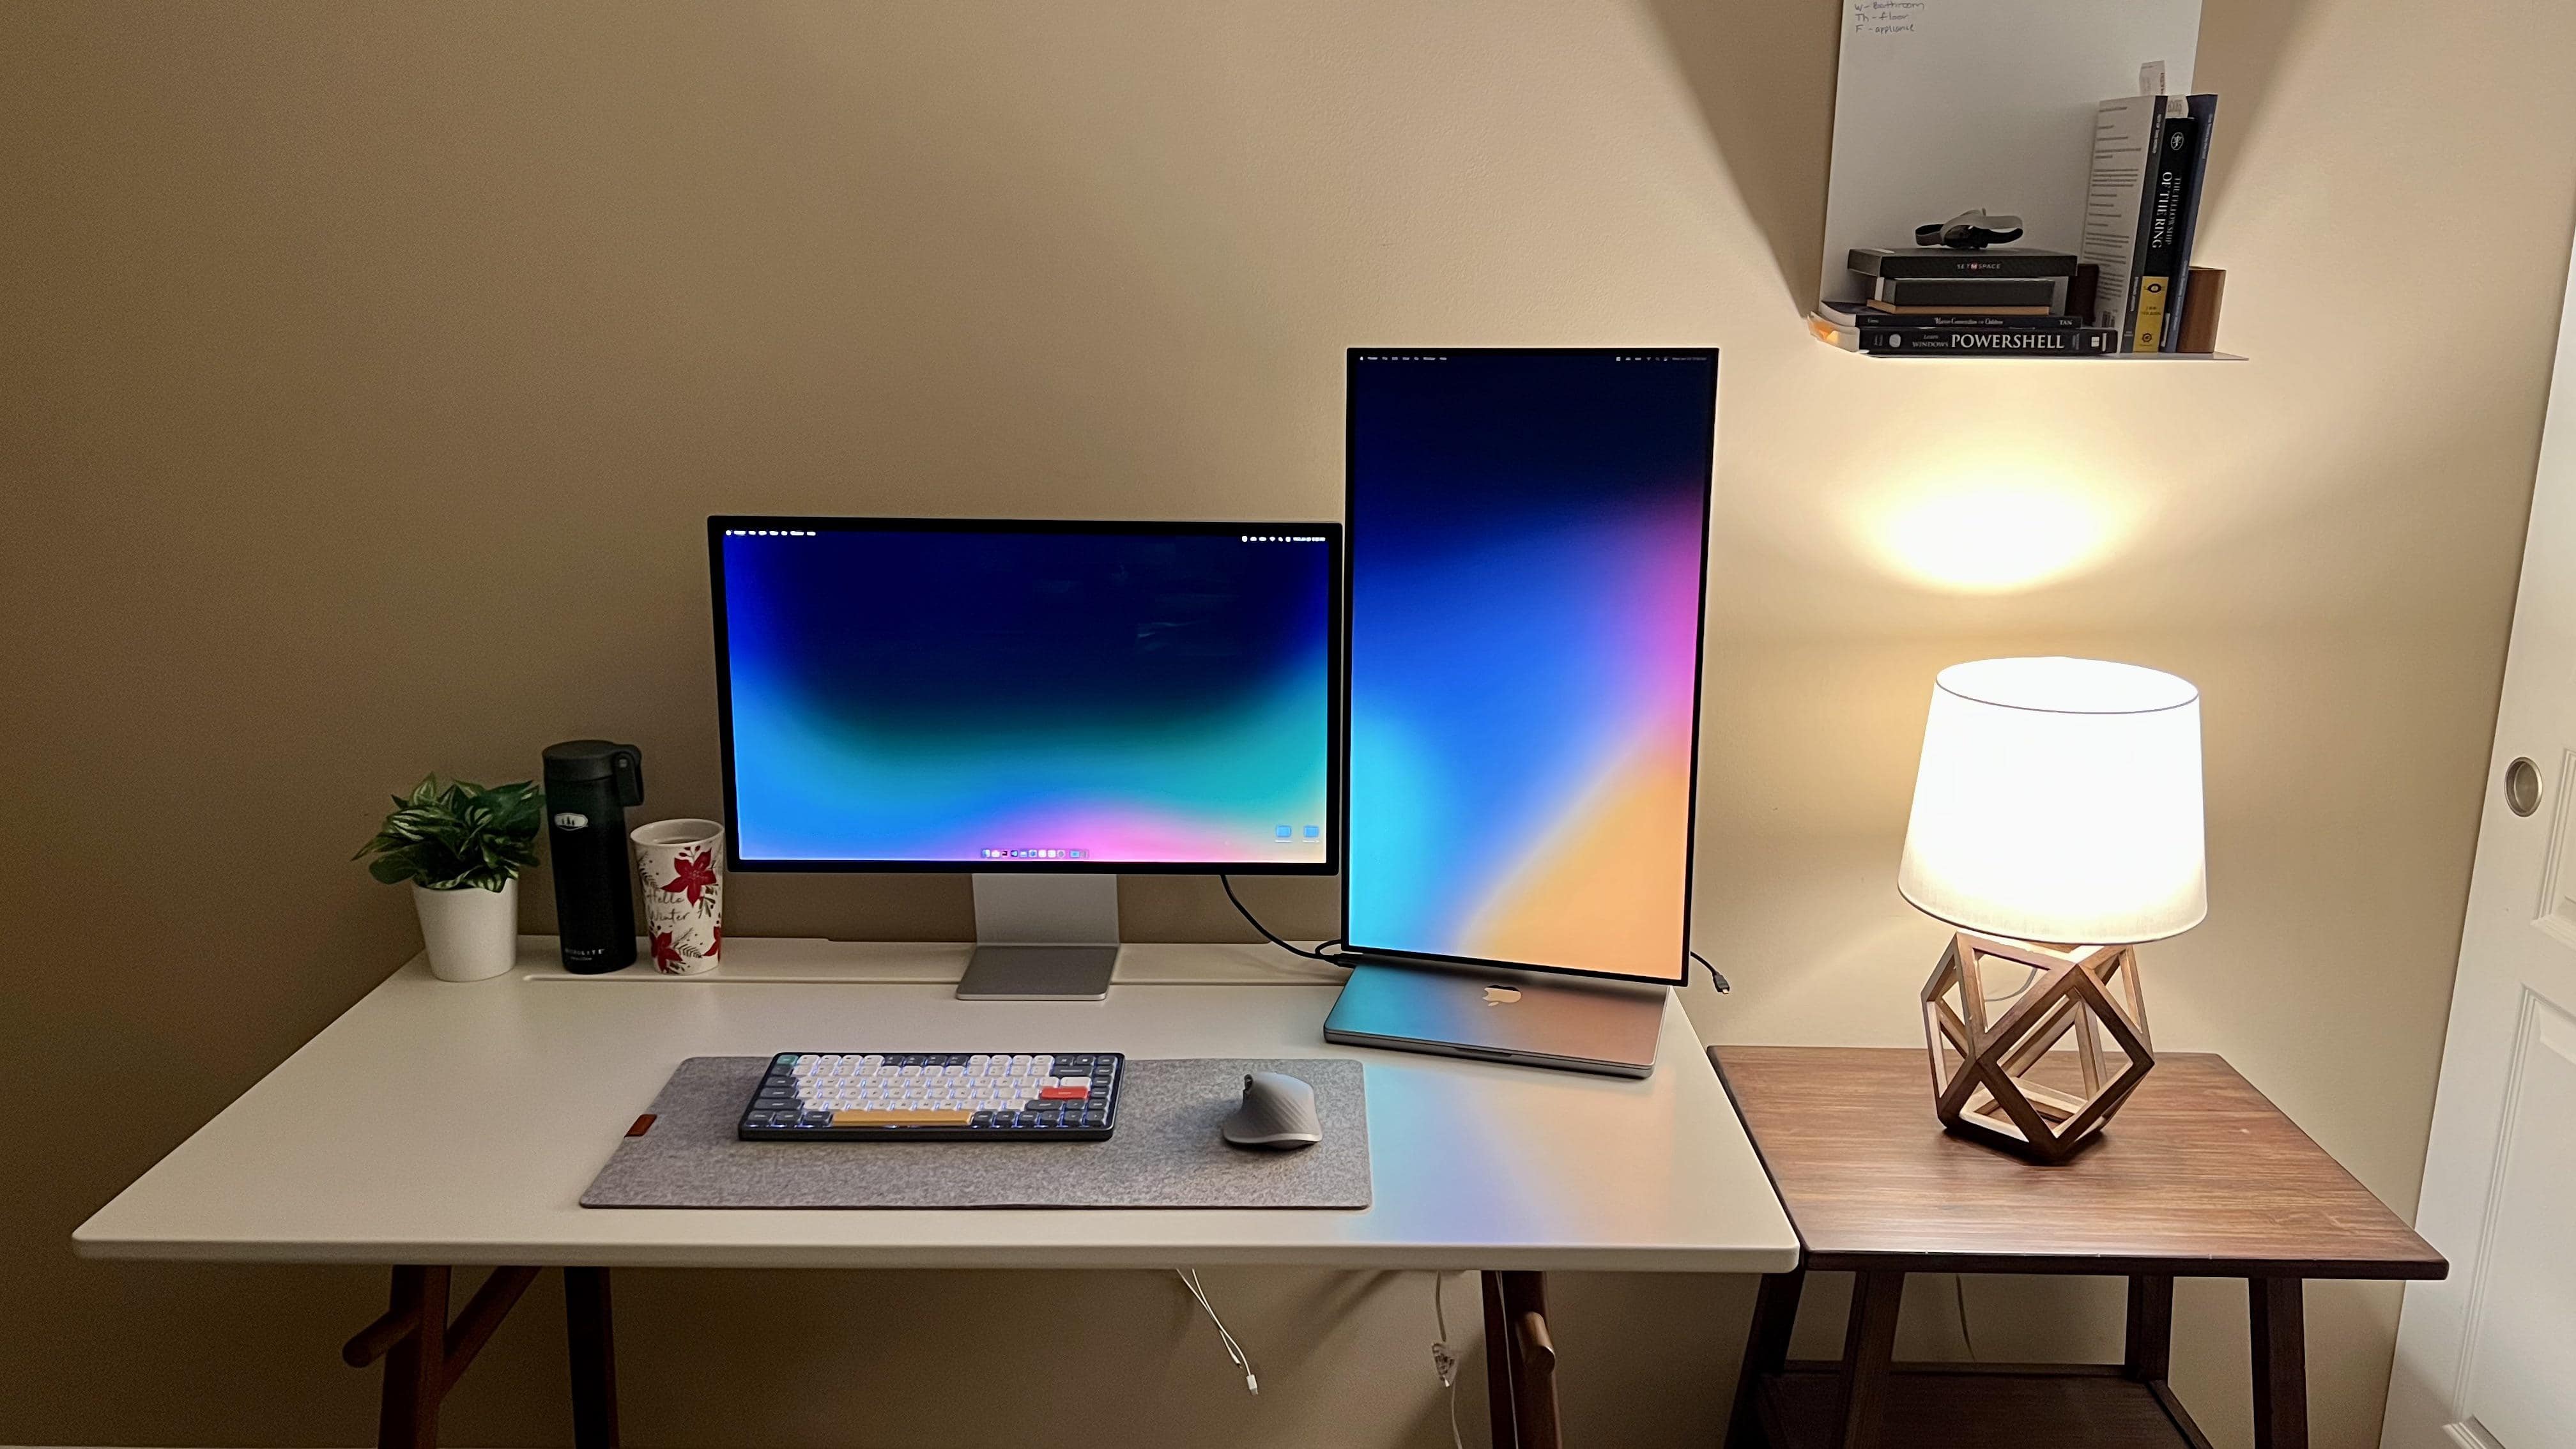 IT engineer’s MacBook Pro and Studio Display quietly get the job done [Setups]